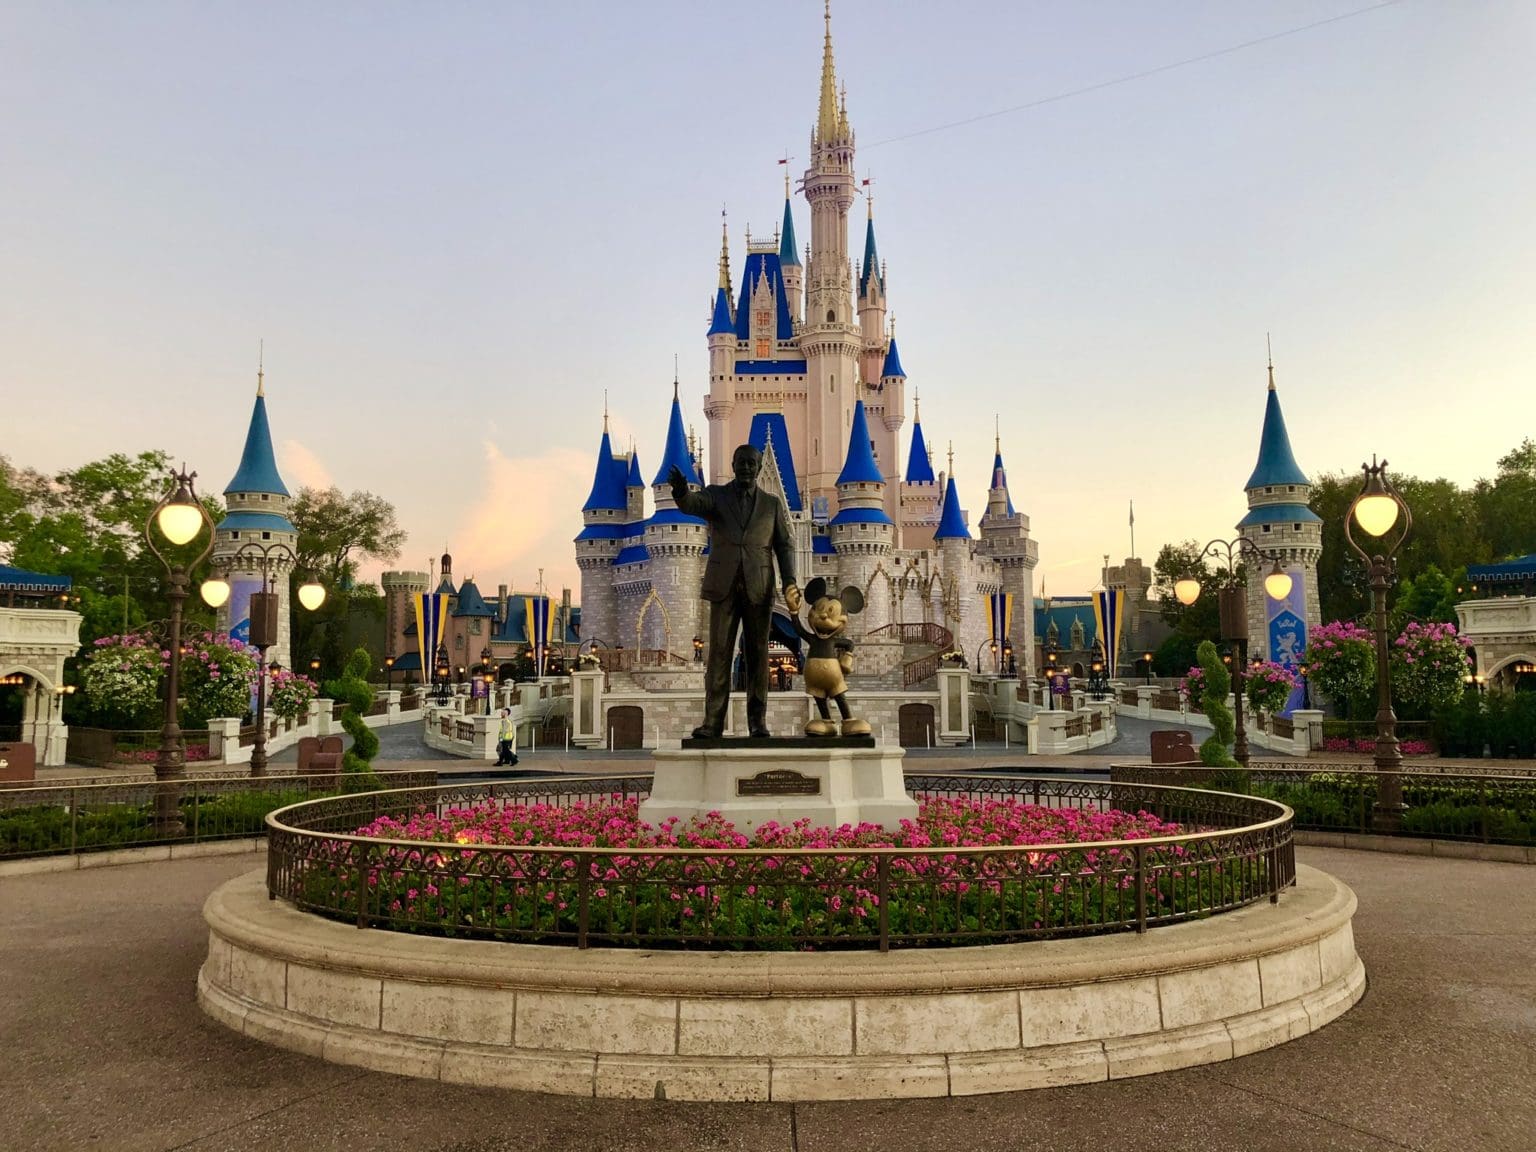 Florida versus Disney: The Business of Politics